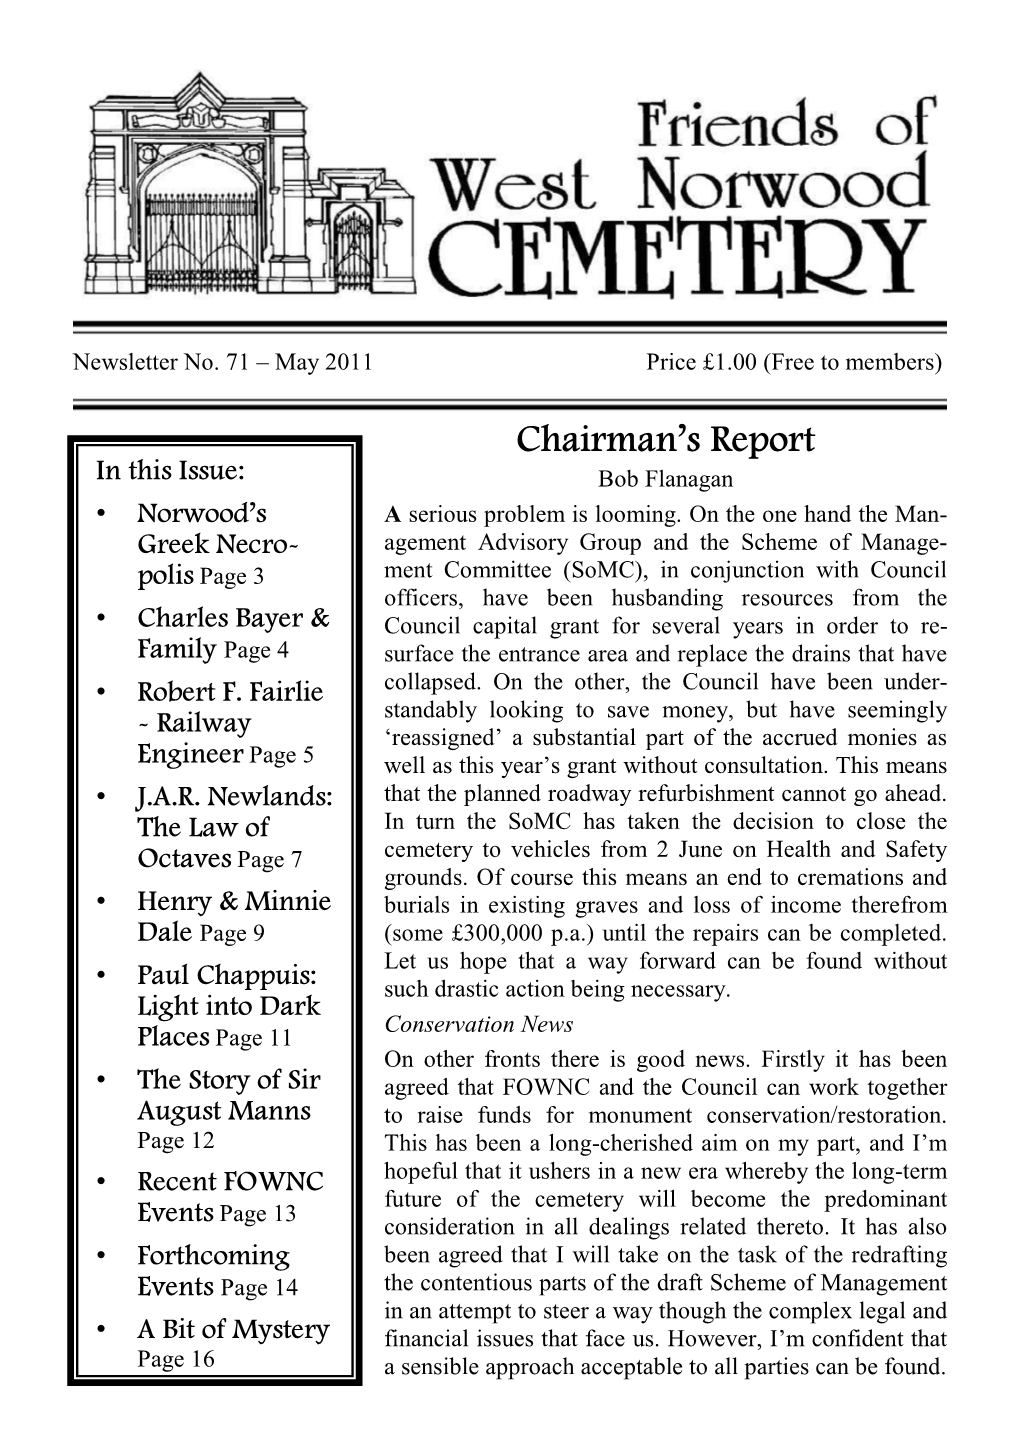 Chairman's Report